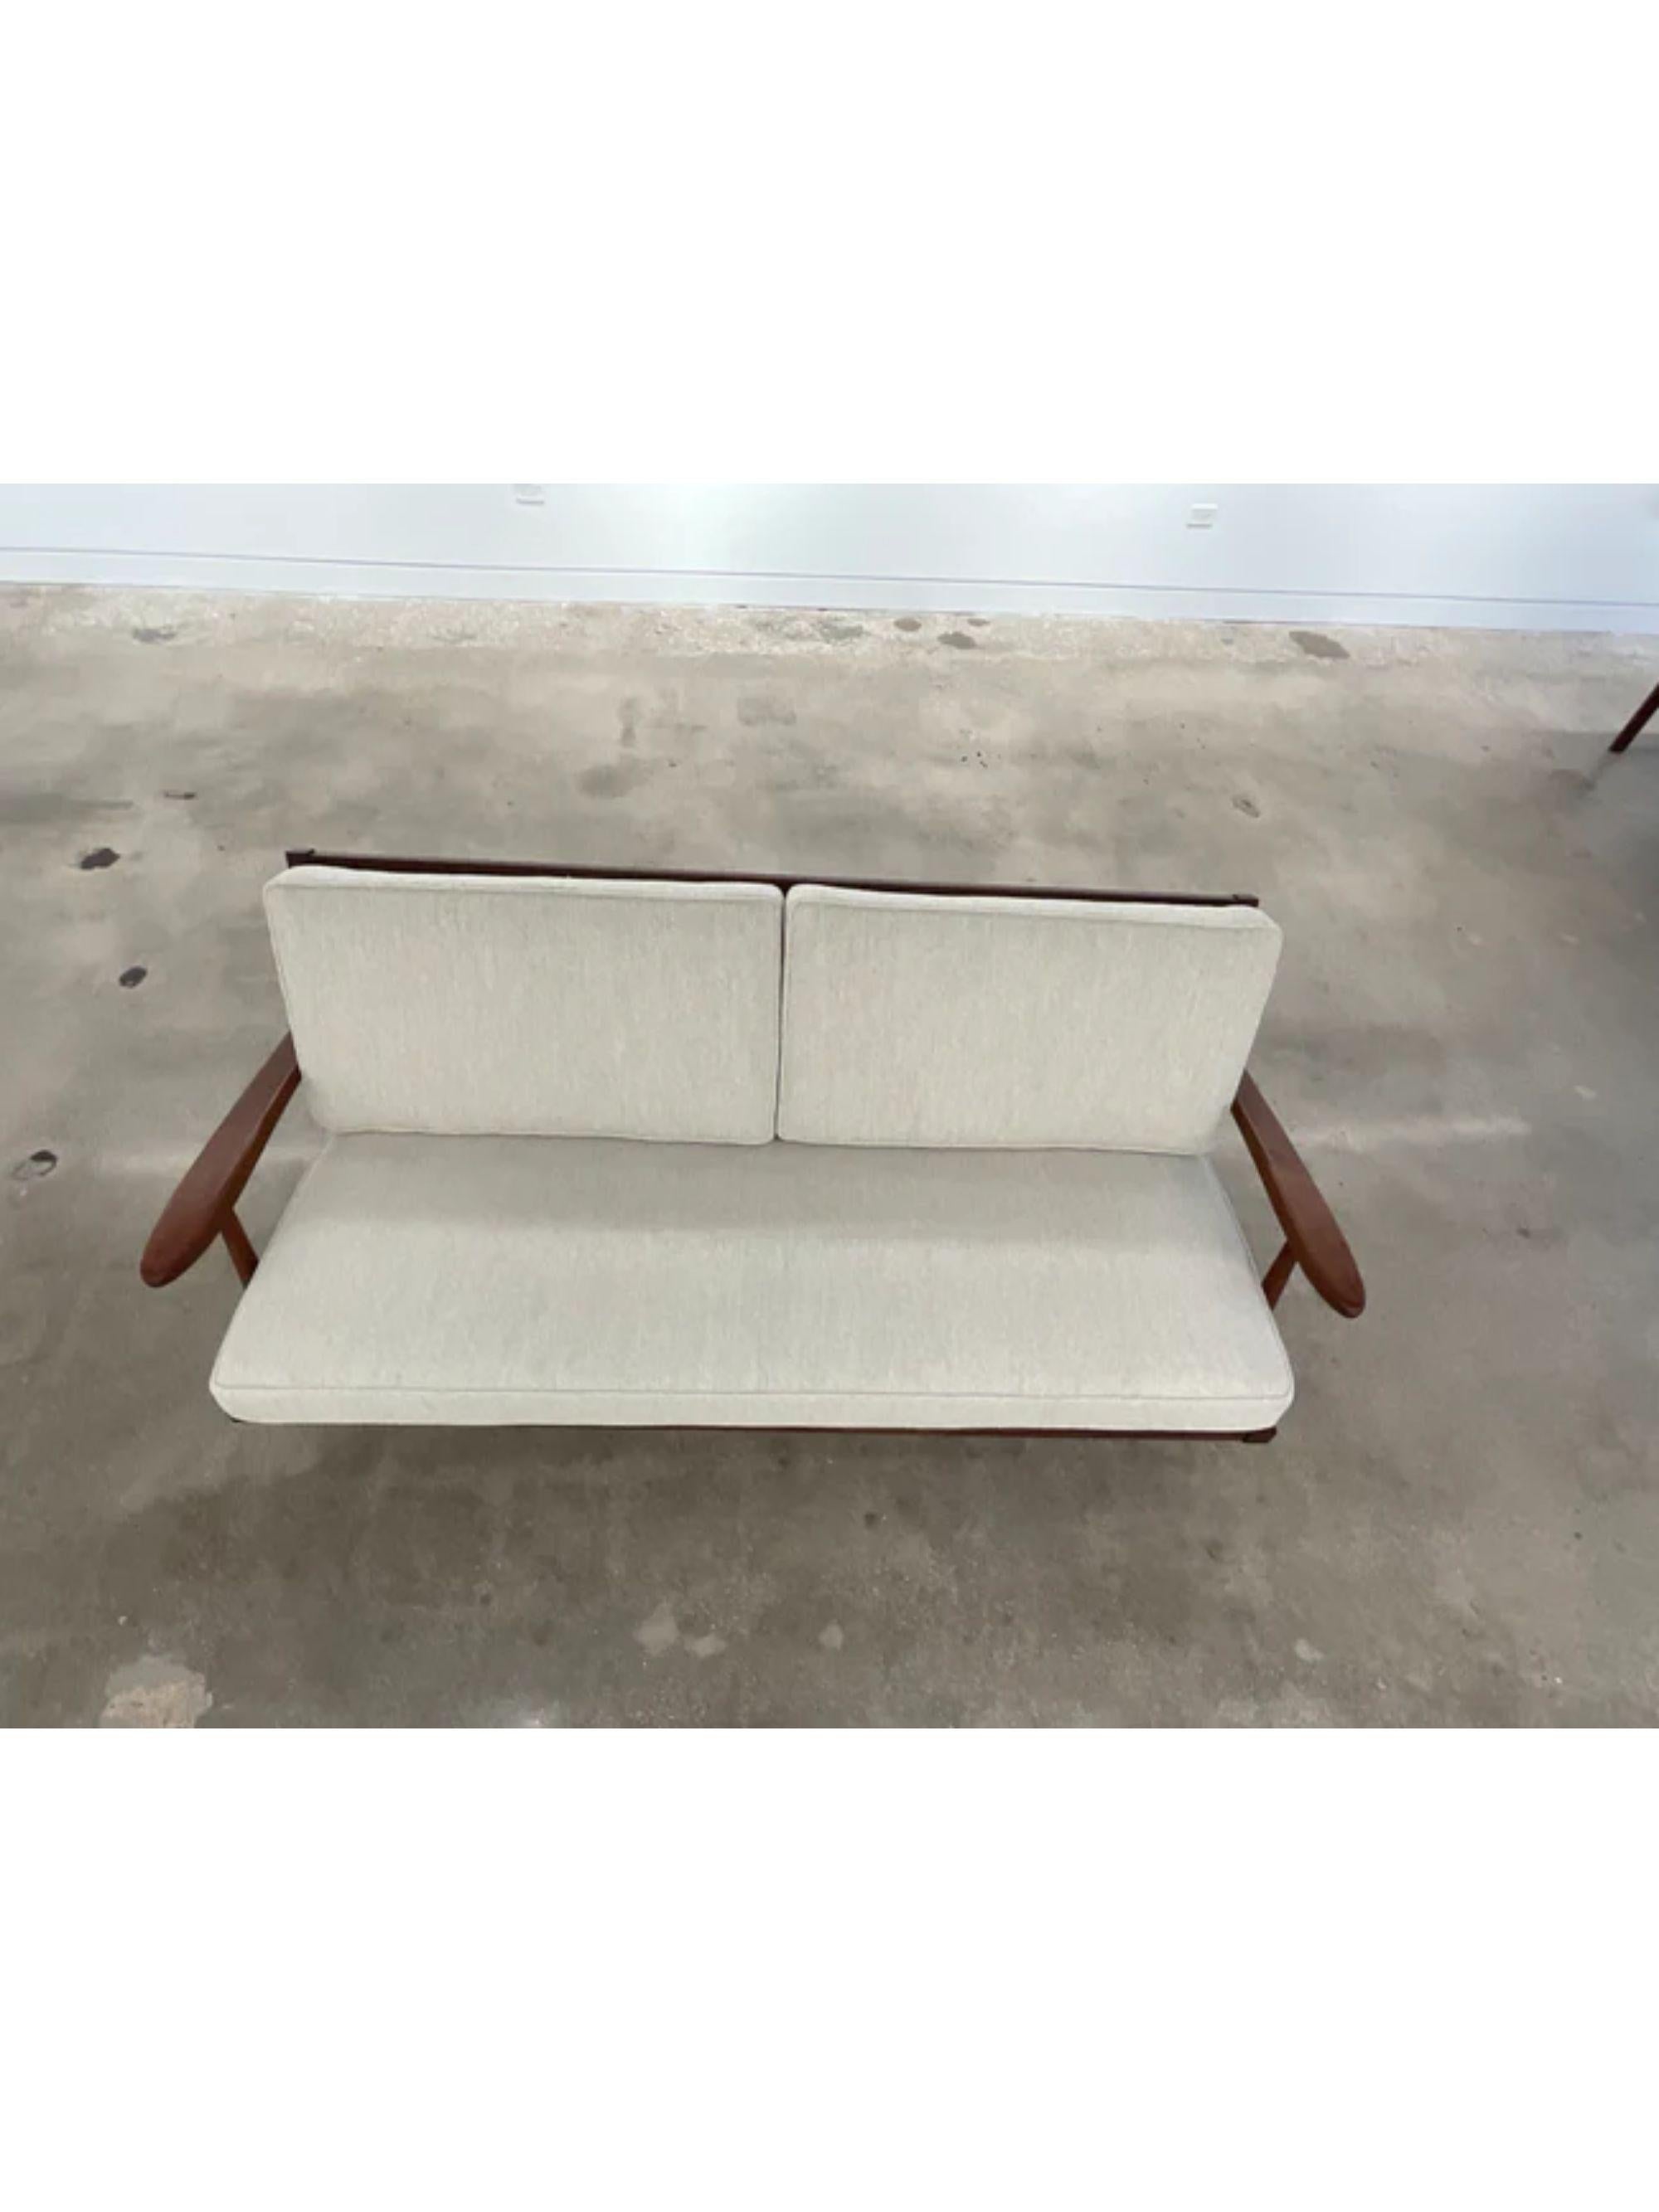 Upholstery George Nakashima “Cushion” three seat walnut sofa with arms, USA, 1961